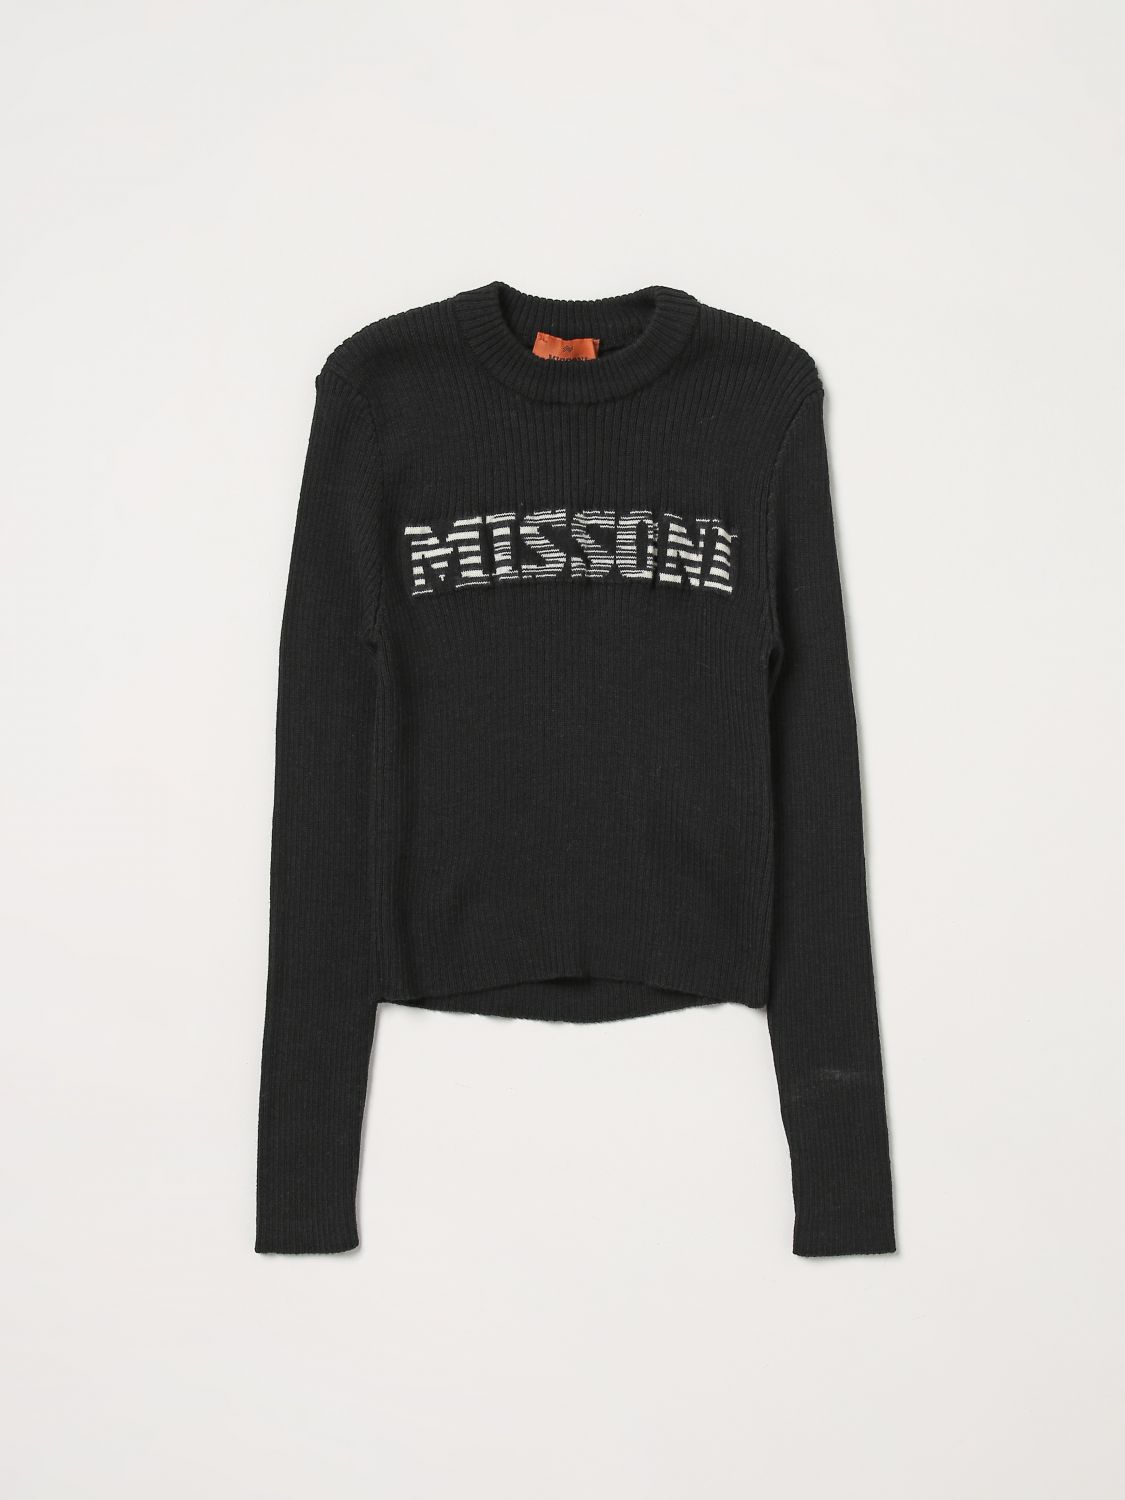 Missoni Sweater  Kids Color Black